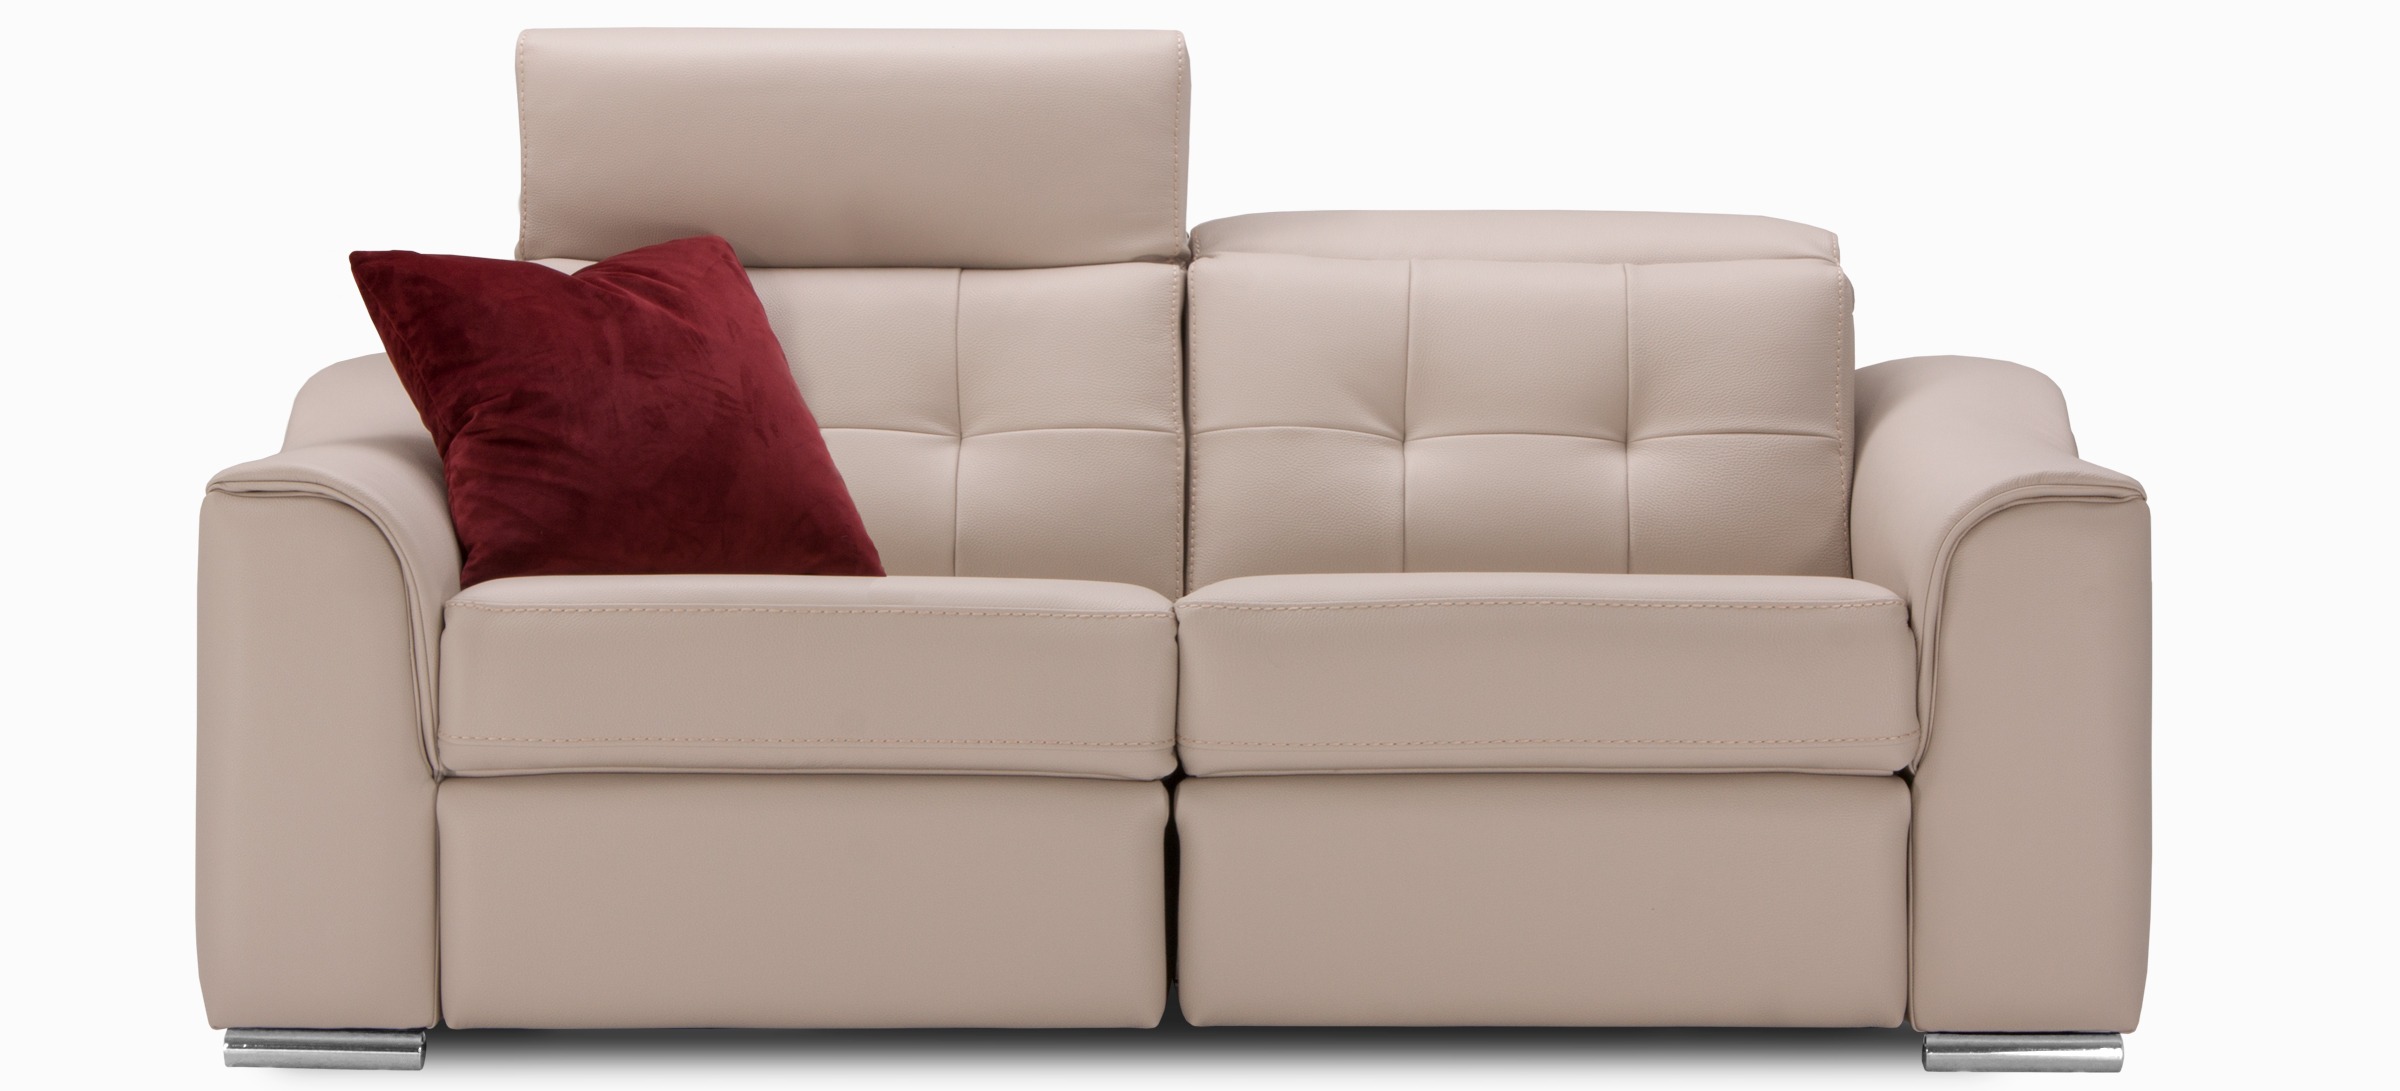 Brooklyn sofa apt illusion grege front1